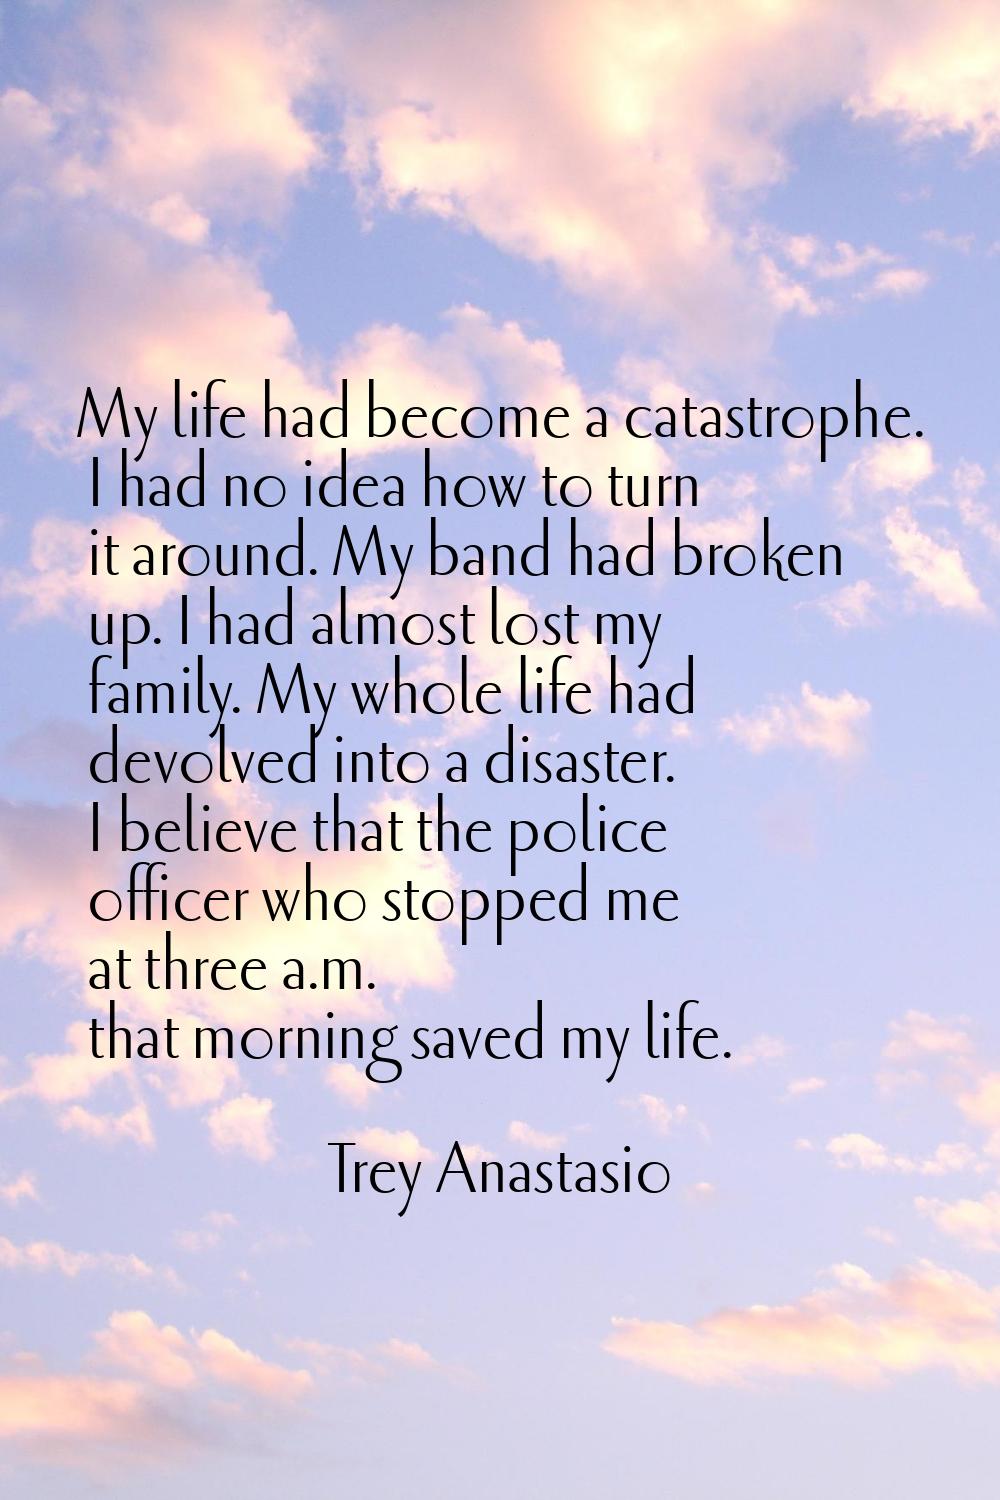 My life had become a catastrophe. I had no idea how to turn it around. My band had broken up. I had